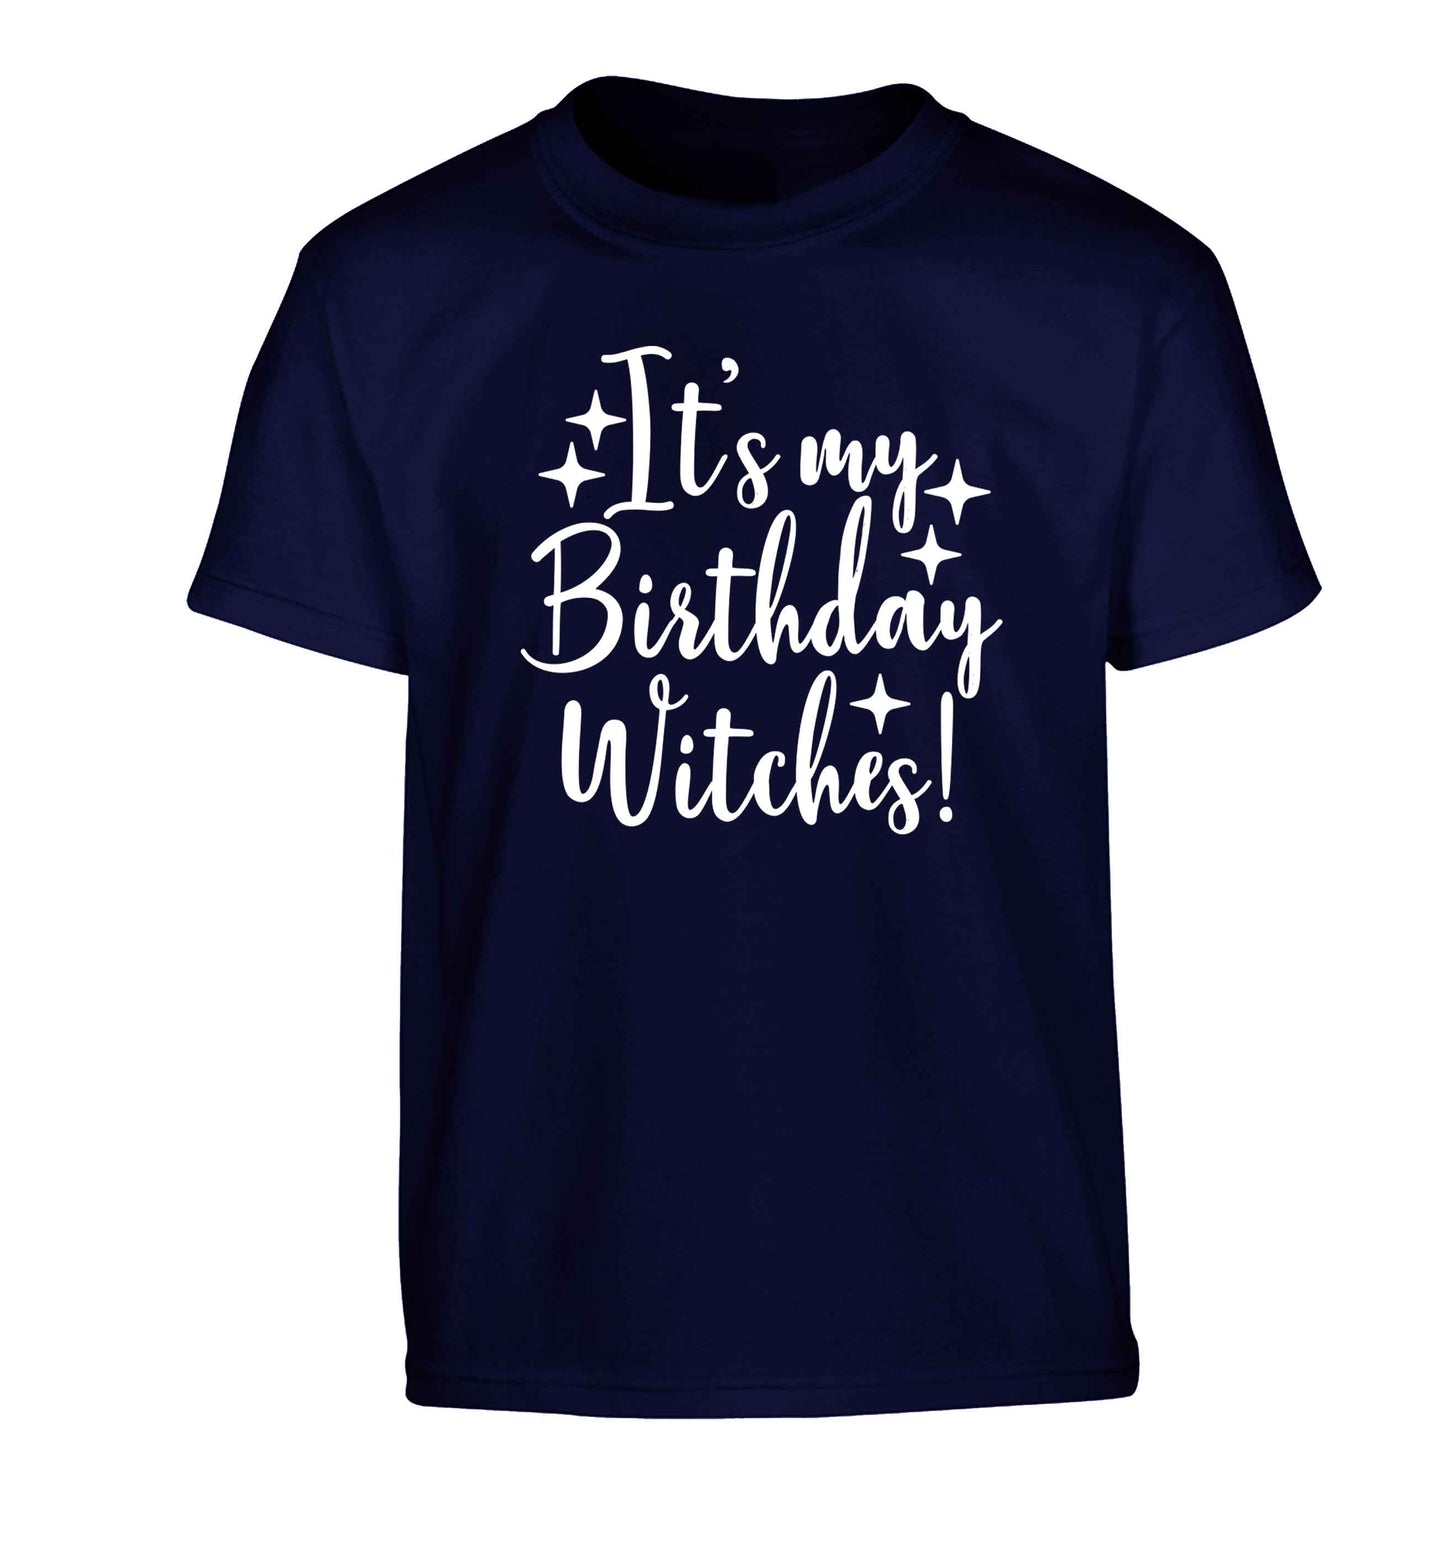 It's my birthday witches!Children's navy Tshirt 12-13 Years